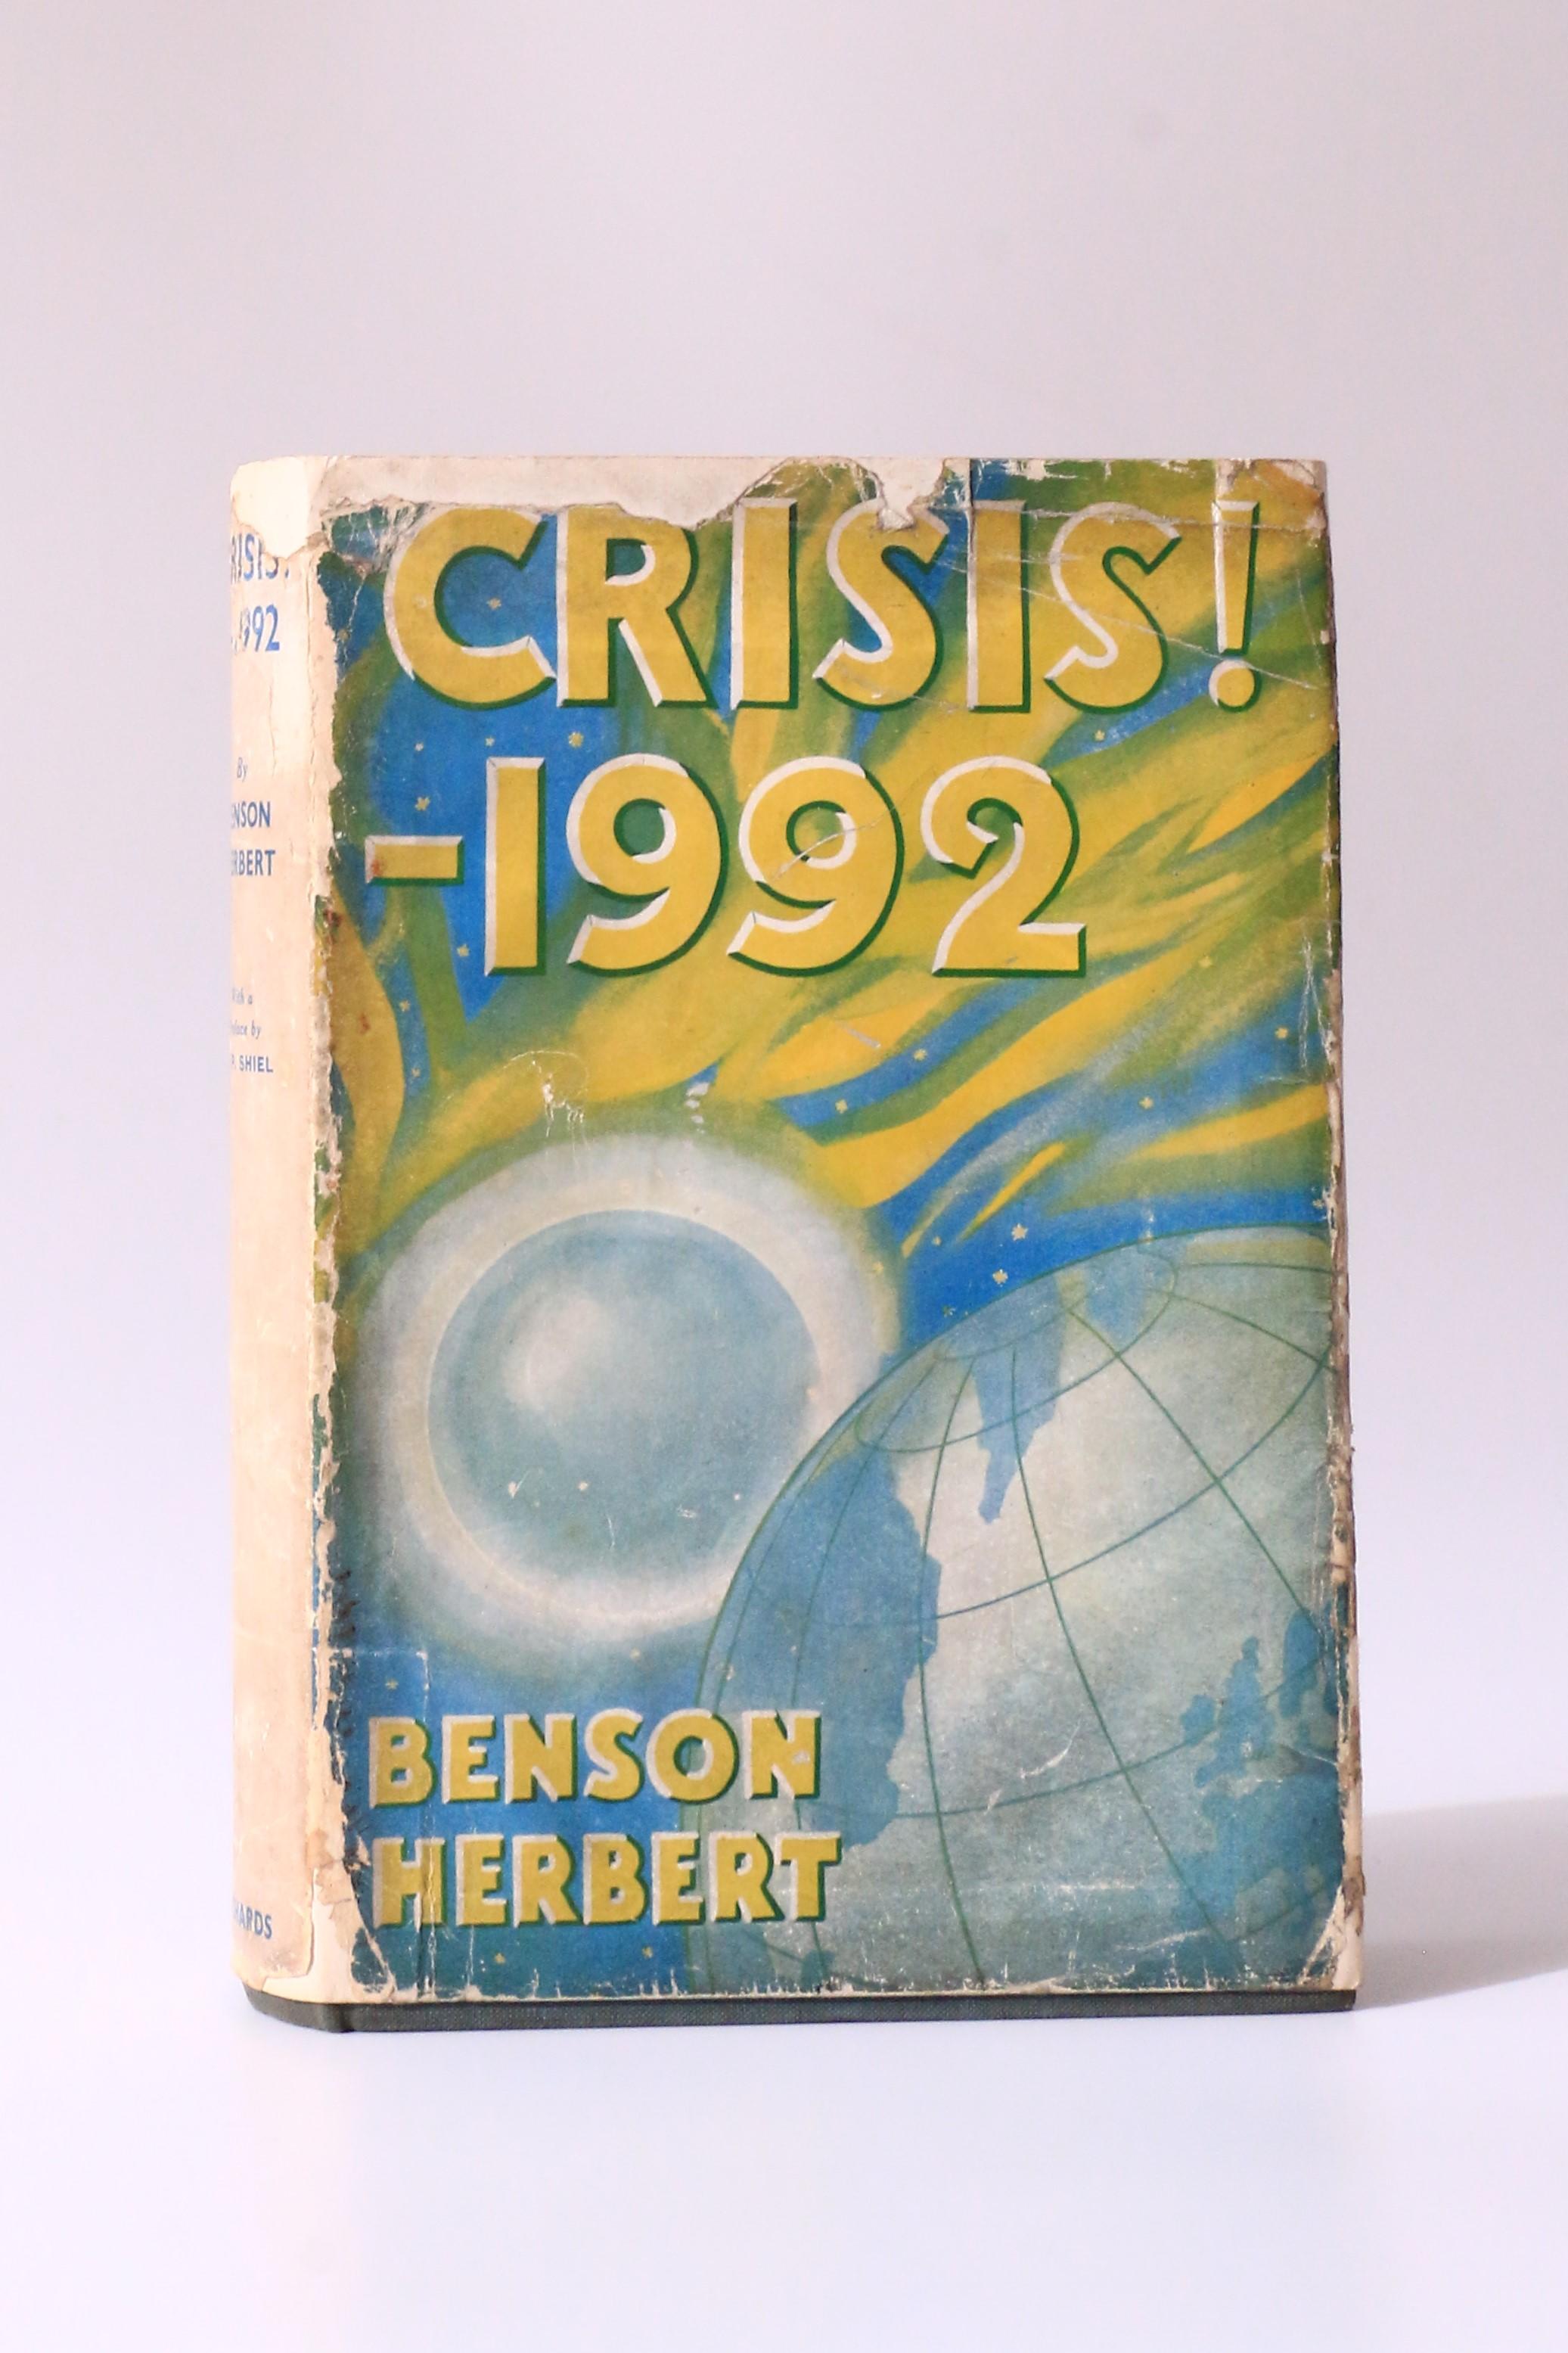 Benson Herbert - Crisis! - 1992 - Grant Richards, 1936, Signed First Edition.